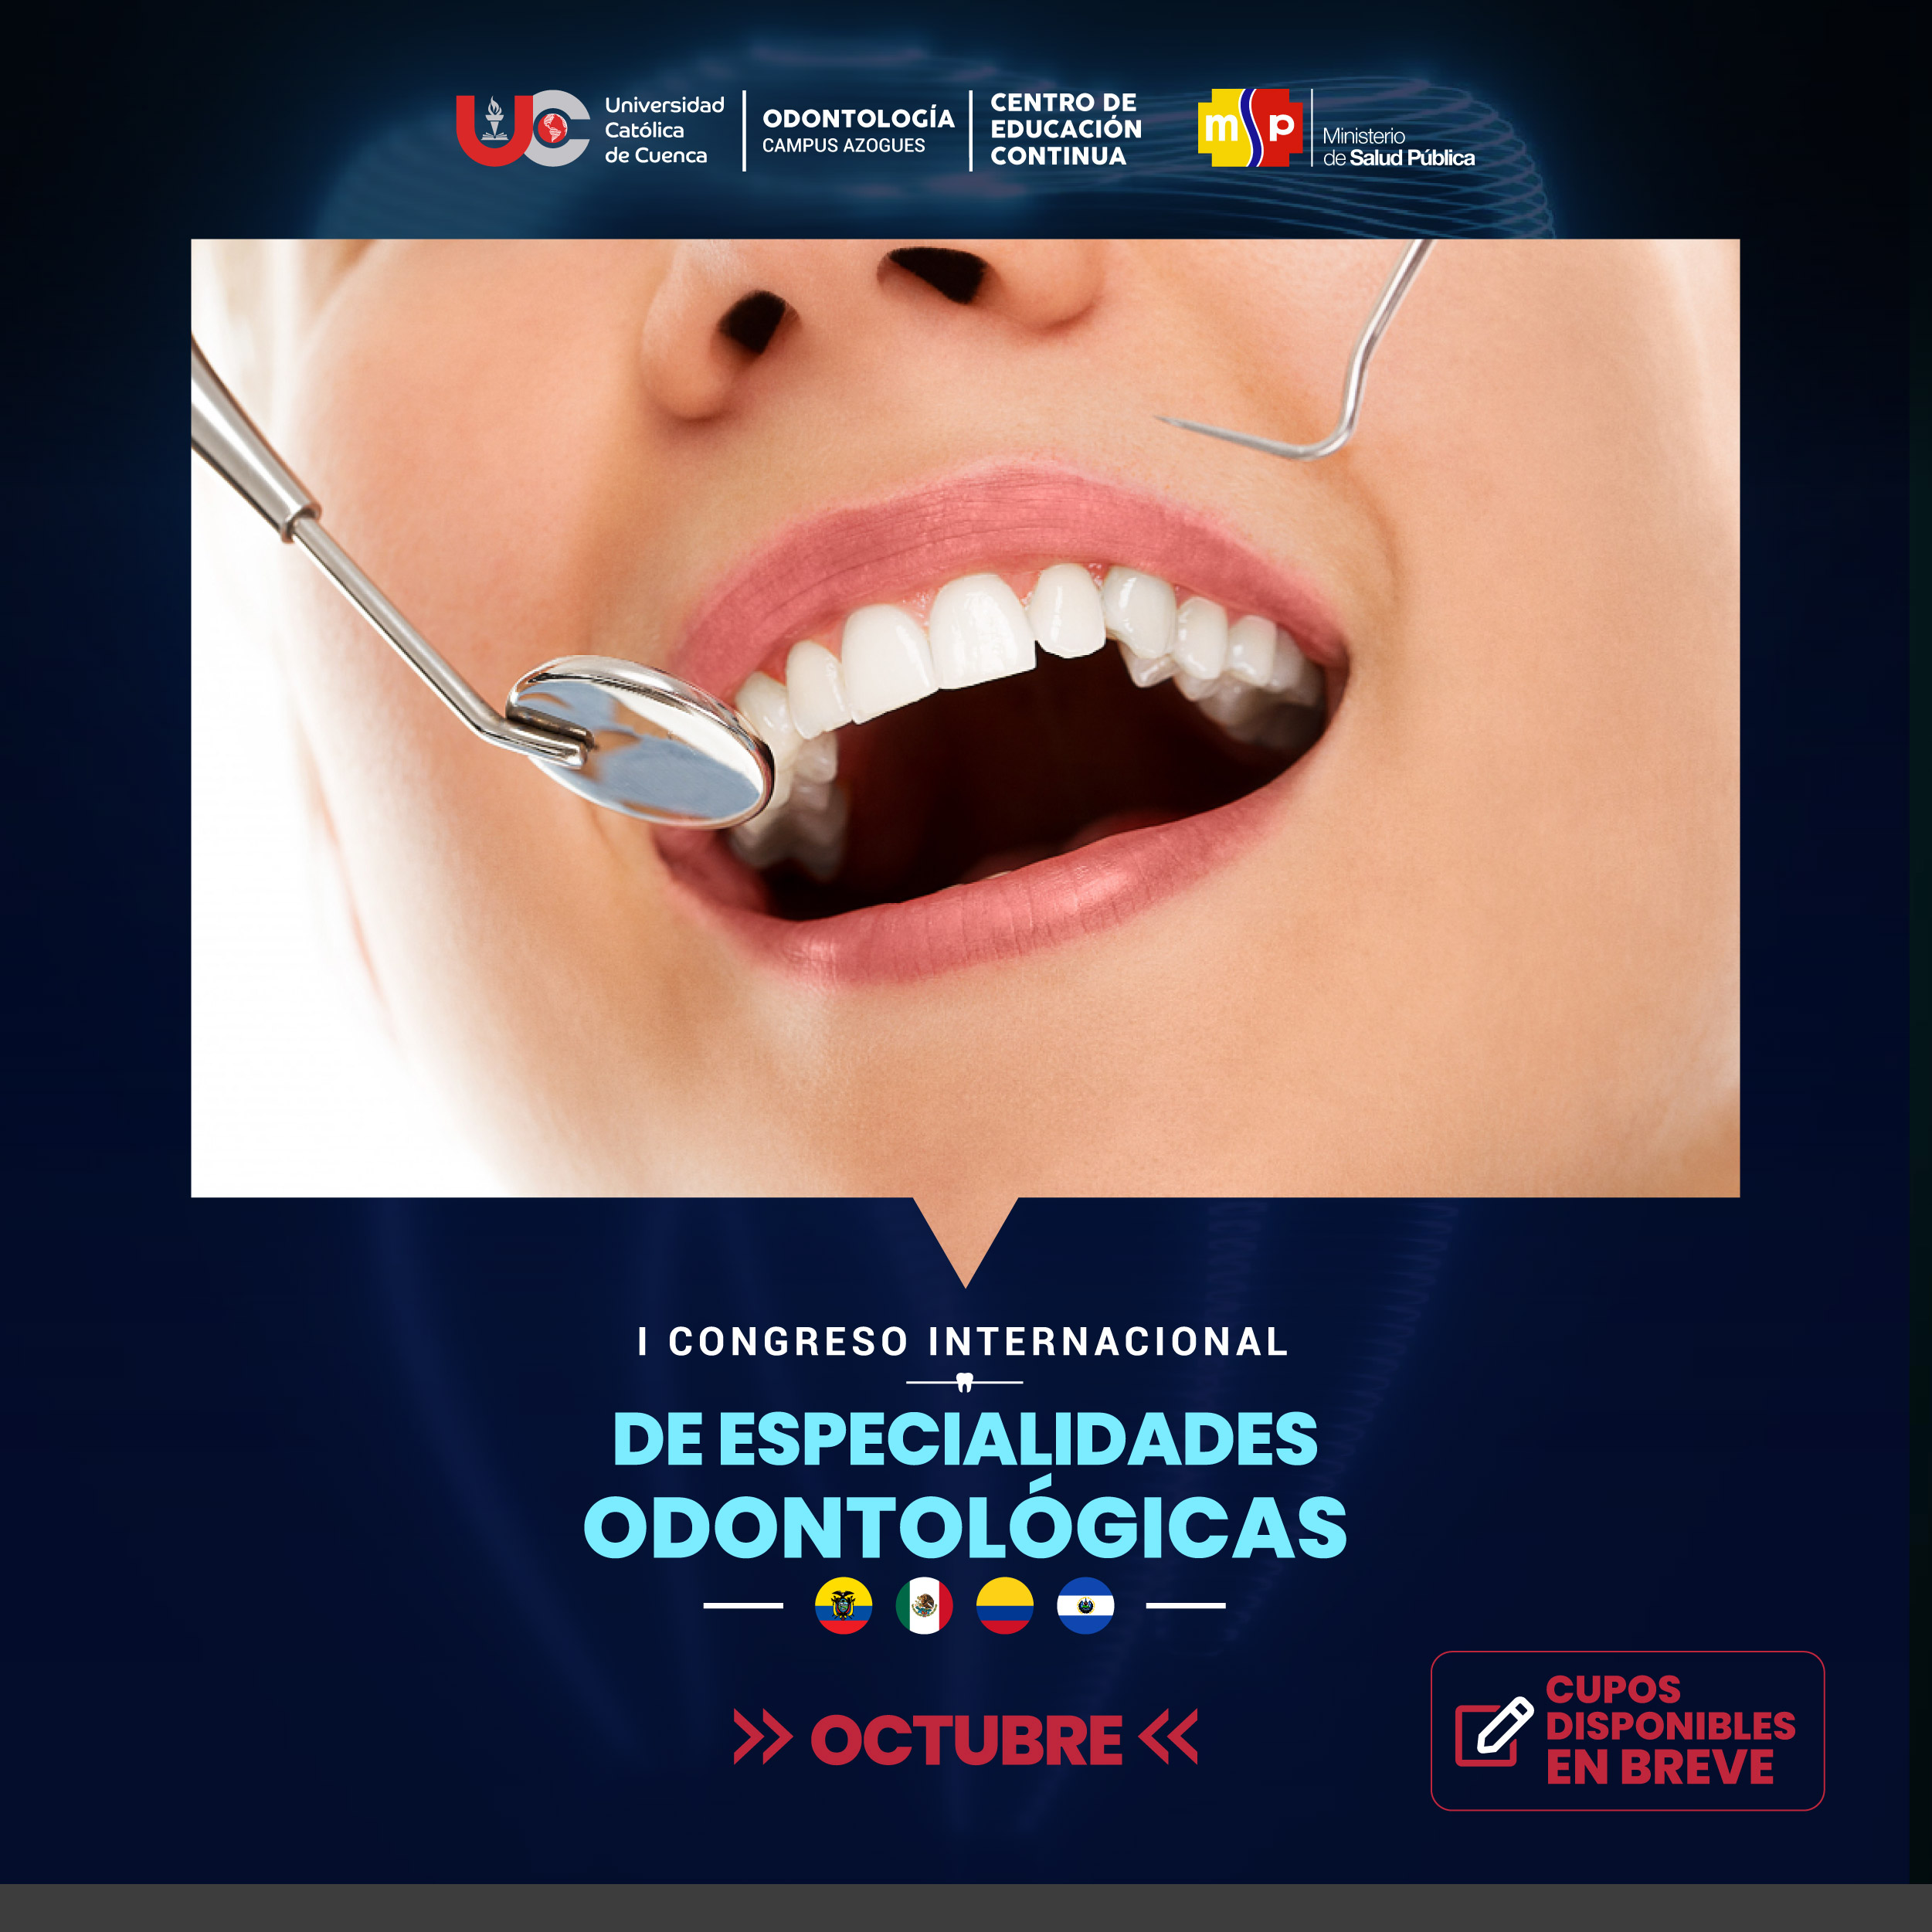 I congreso Especialidades Odontologicas